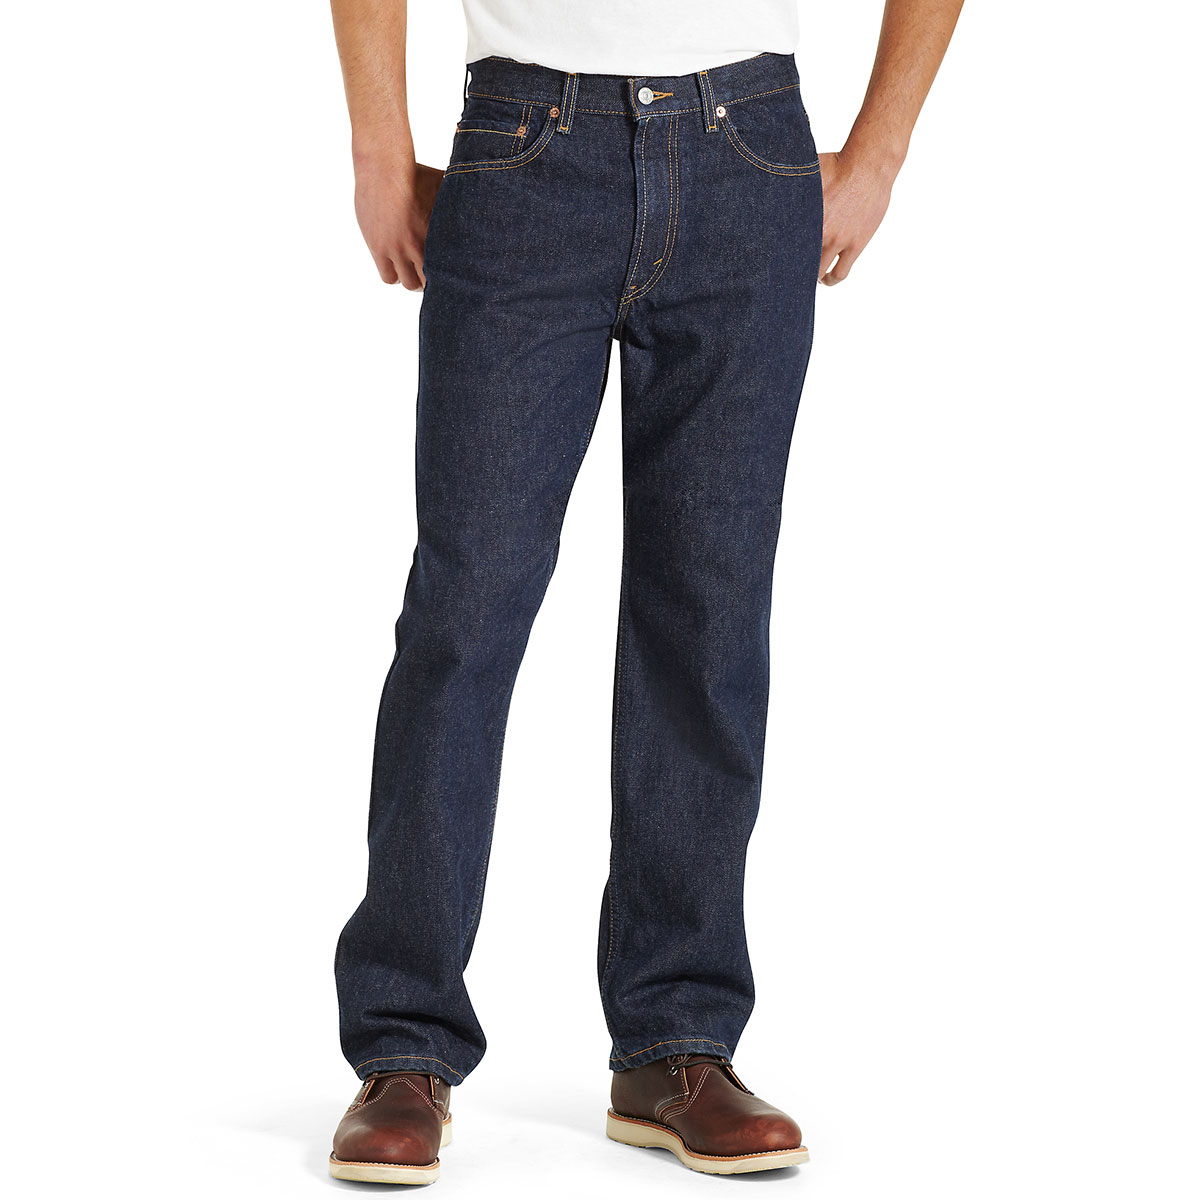 Levi's Men's 505 Regular Fit Jeans - Blue, 34/29